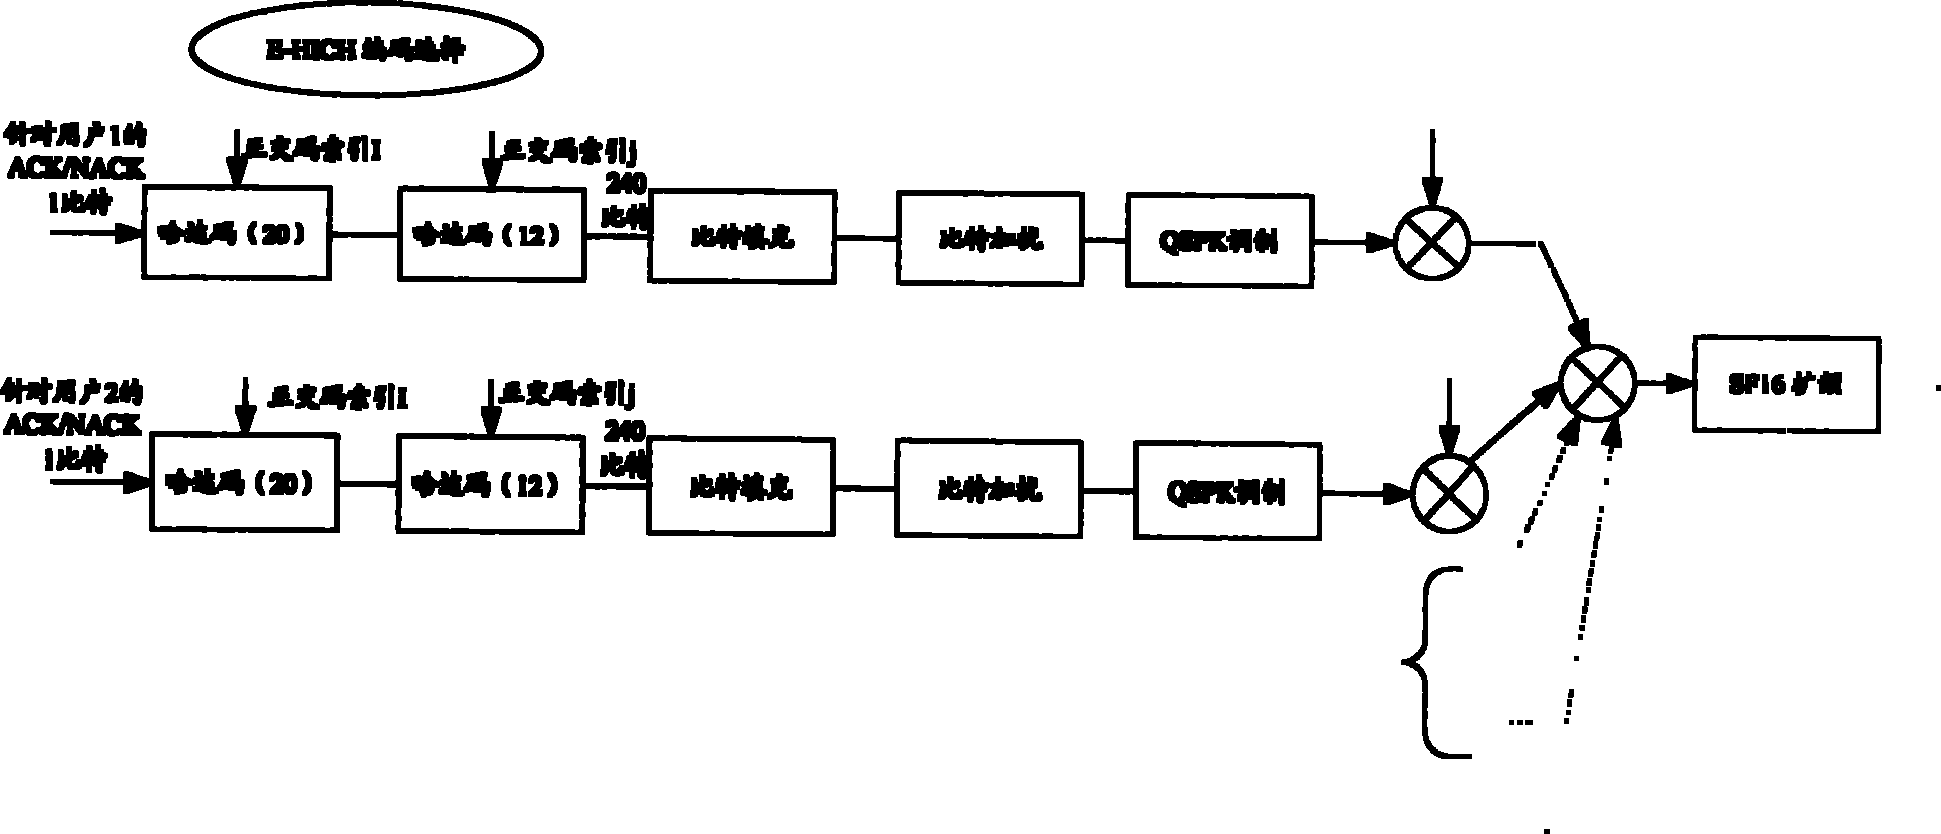 Method for realizing multiplexing on code channel of multi-user data